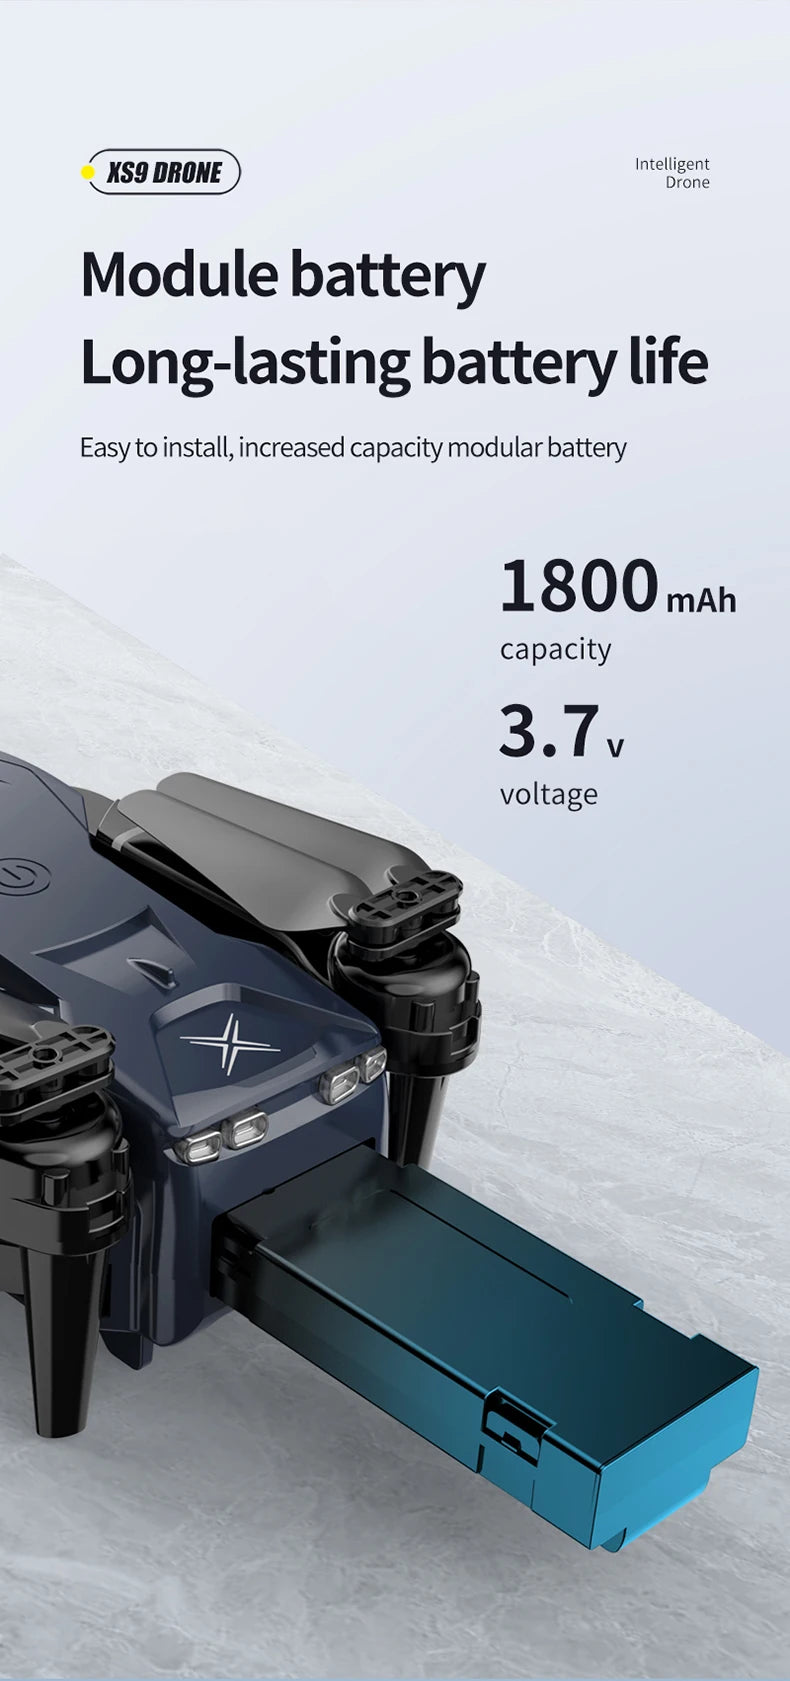 XS9 Drone, XS9 DRONE Intelligent Drone Module battery Long-lasting battery life '